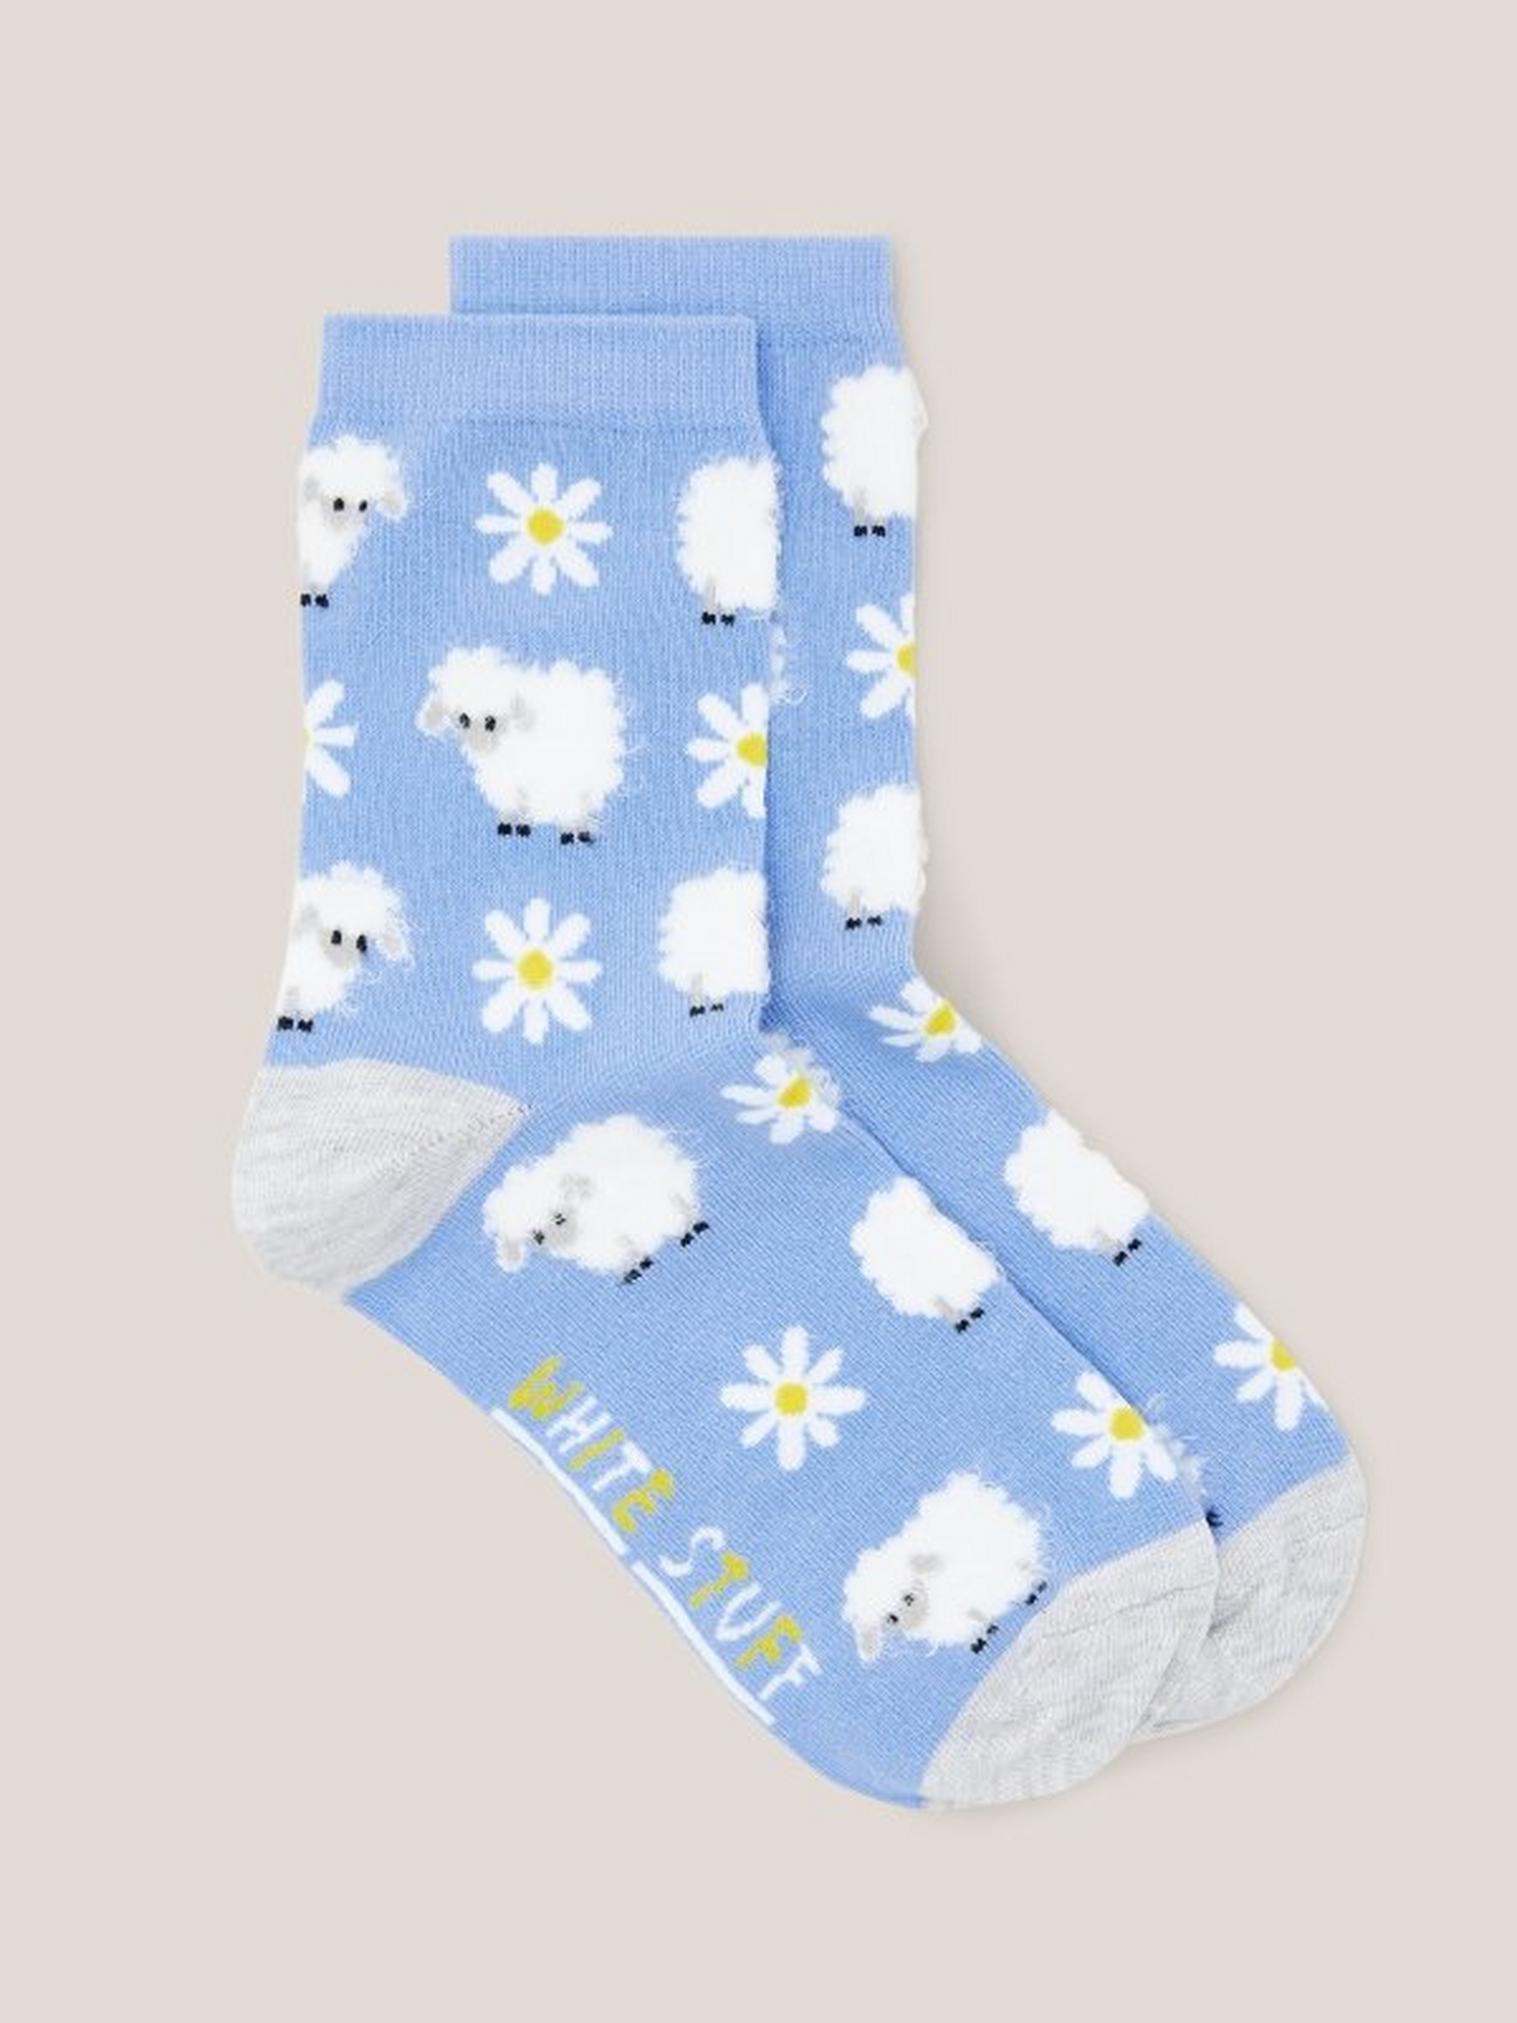 Fluffy Sheep Socks in BLUE MLT - FLAT FRONT